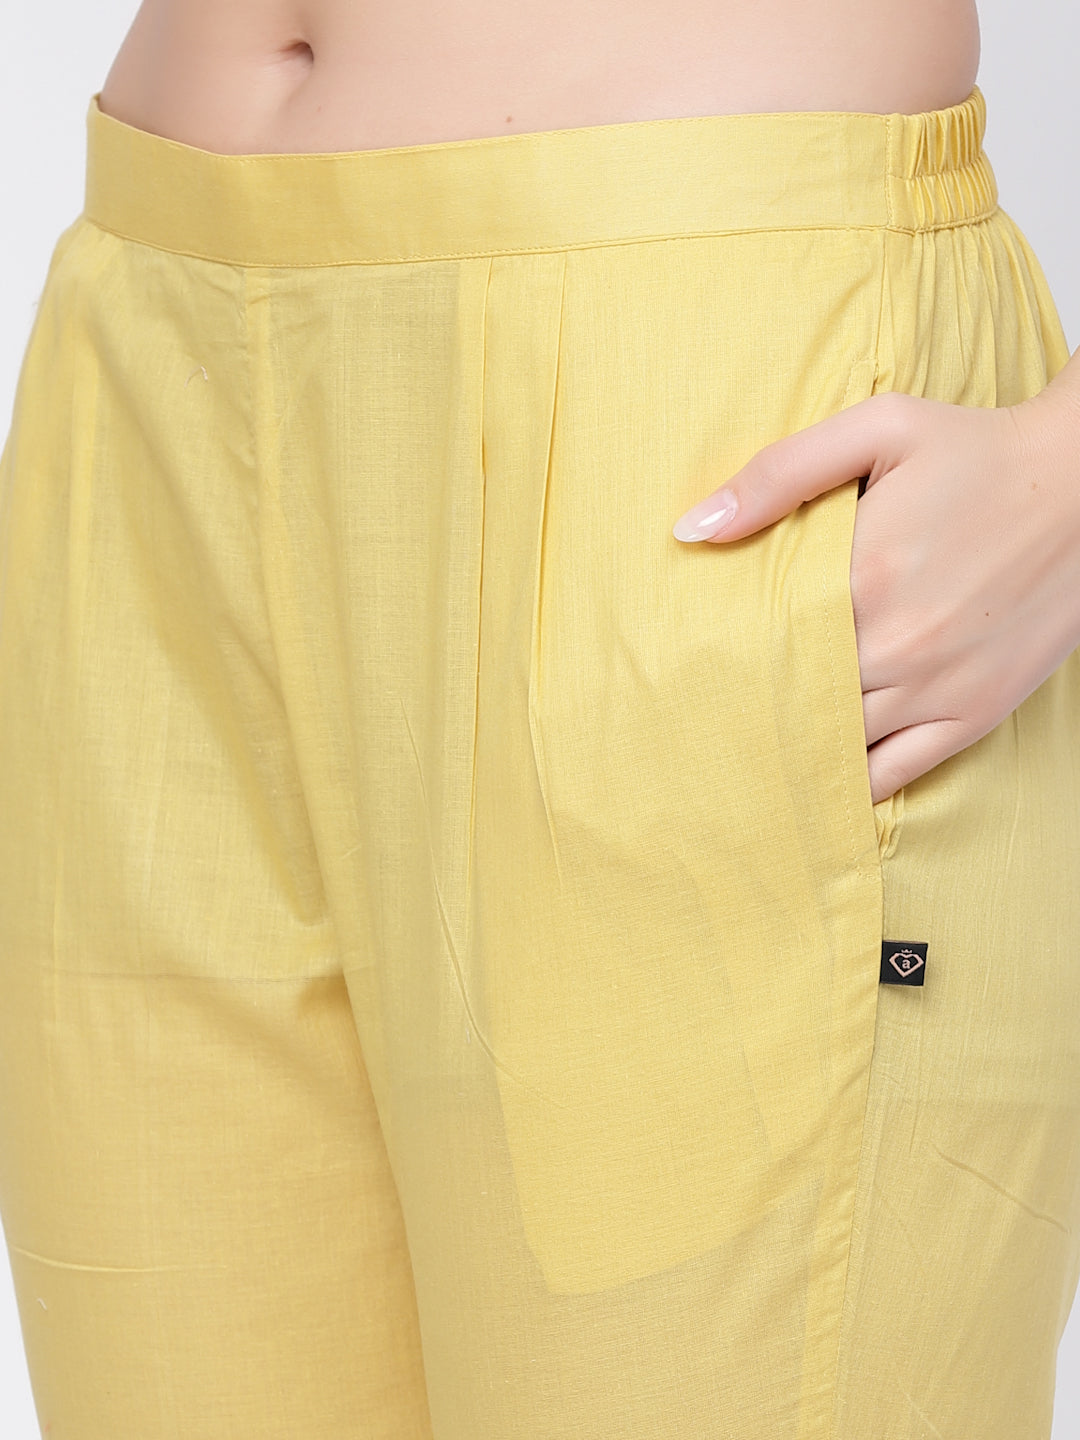 Light Yellow Mal Cotton Kurta Pant with Dupatta Set - ARH721